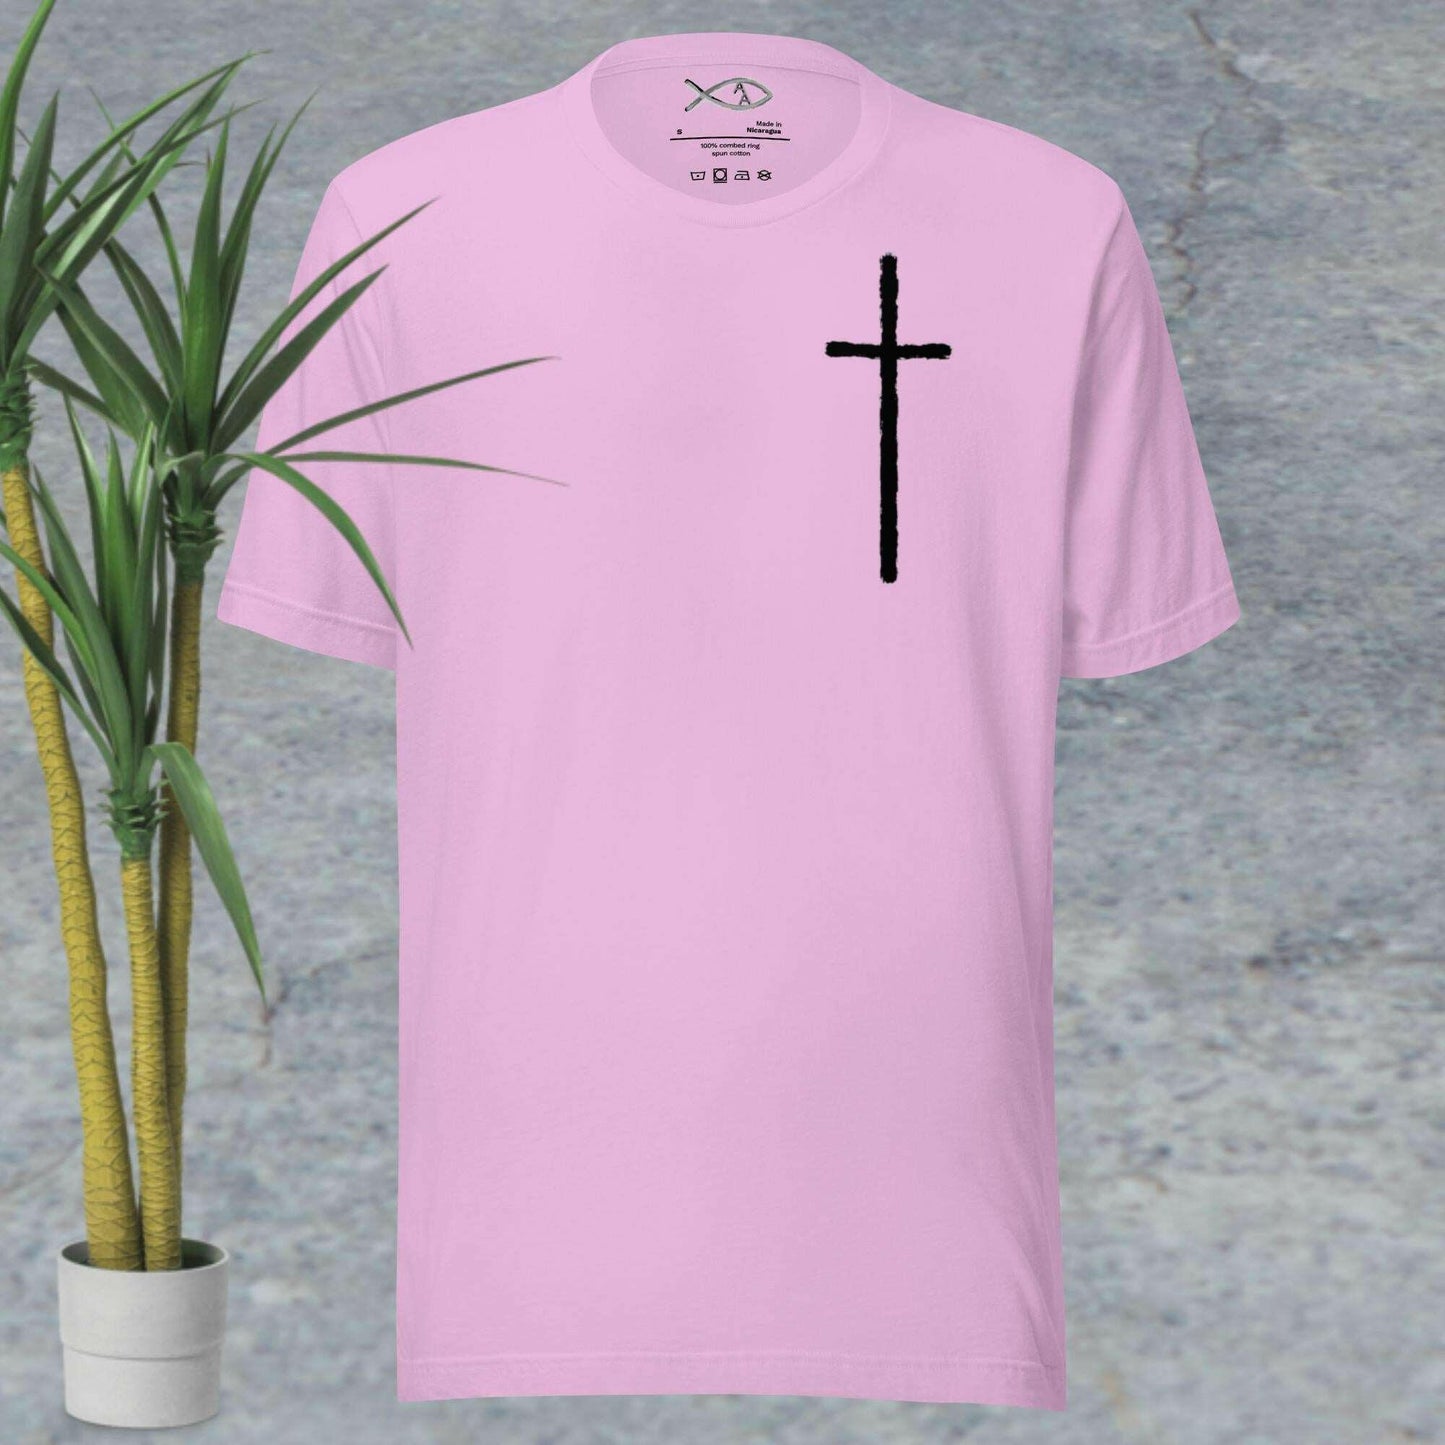 Joshua 1:9 - Unisex t-shirt